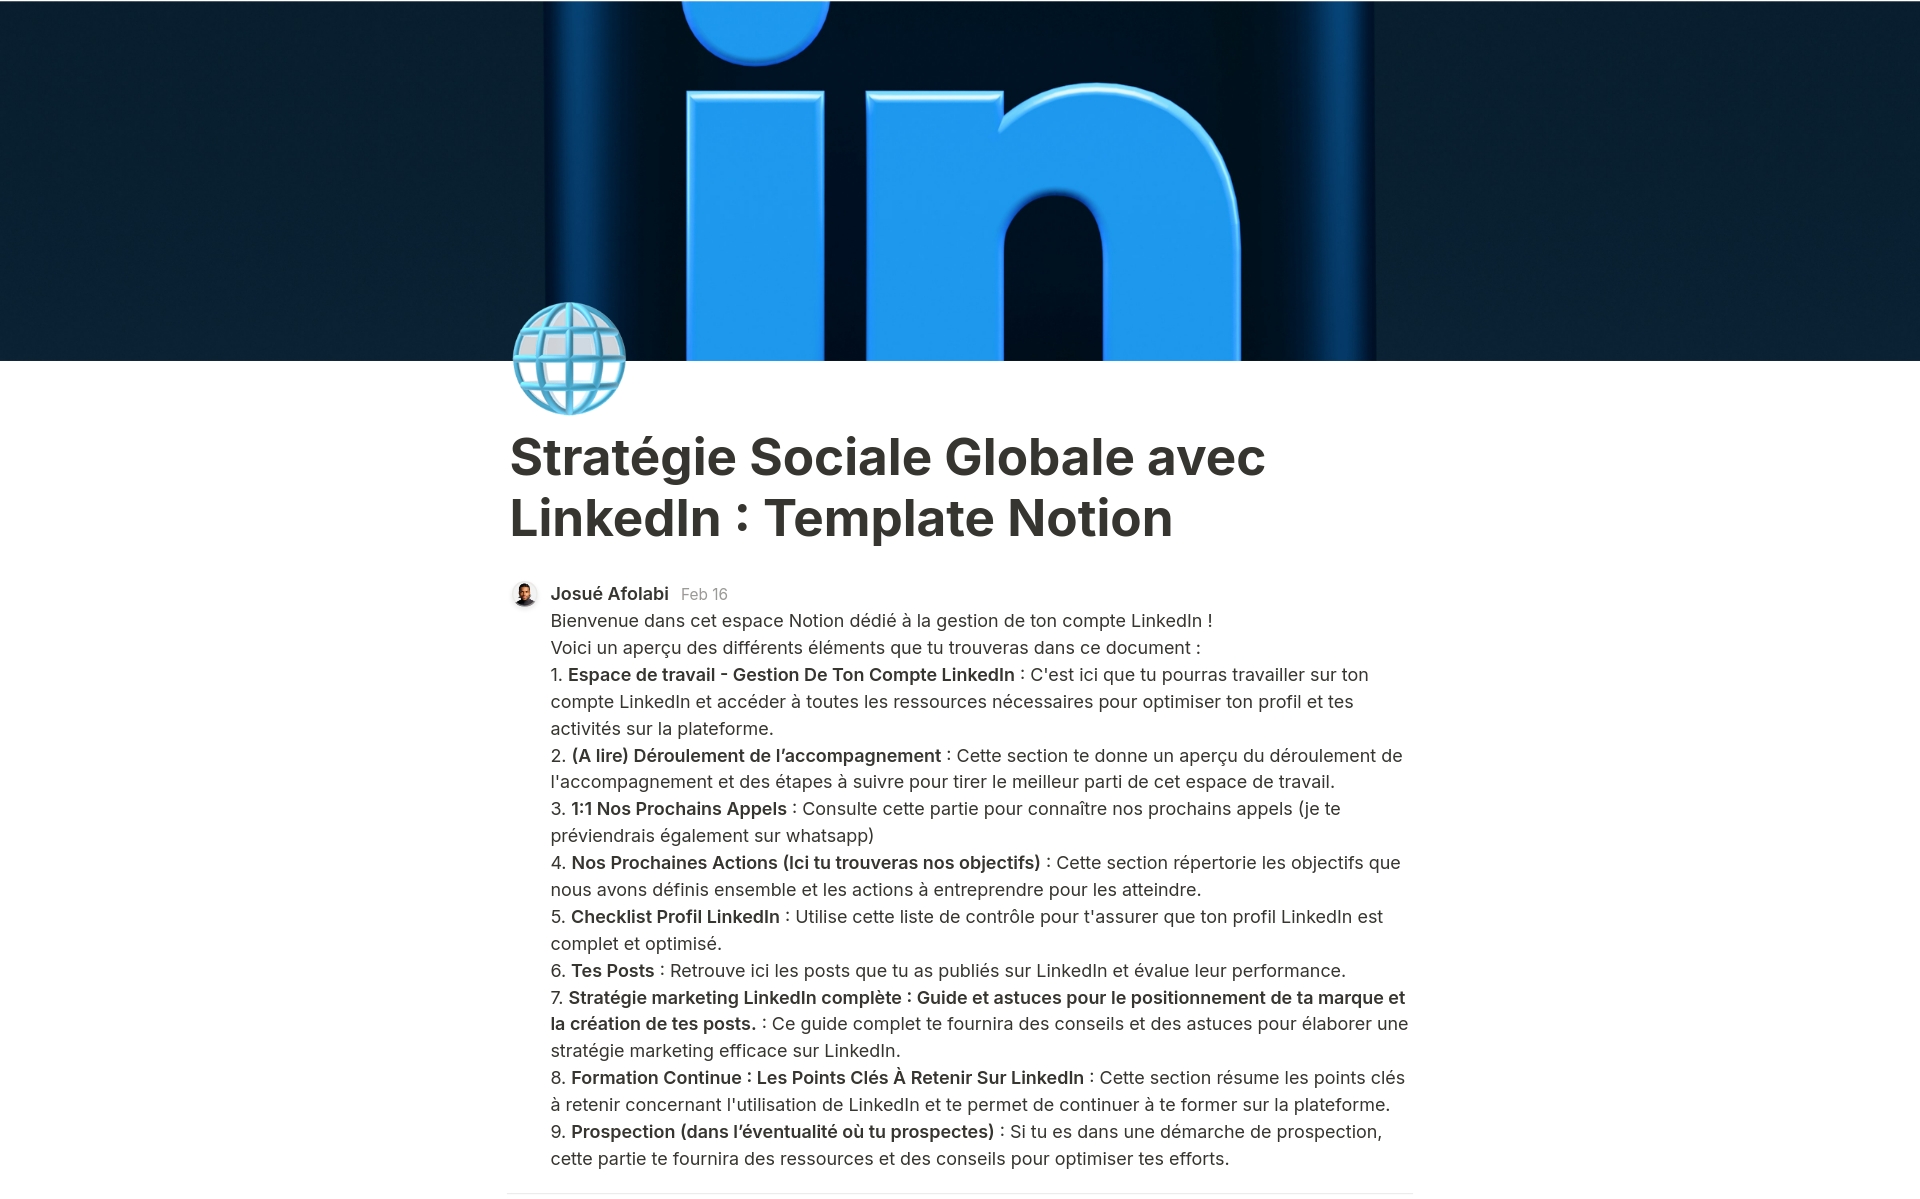 Vista previa de una plantilla para Stratégie Sociale Globale avec LinkedIn 